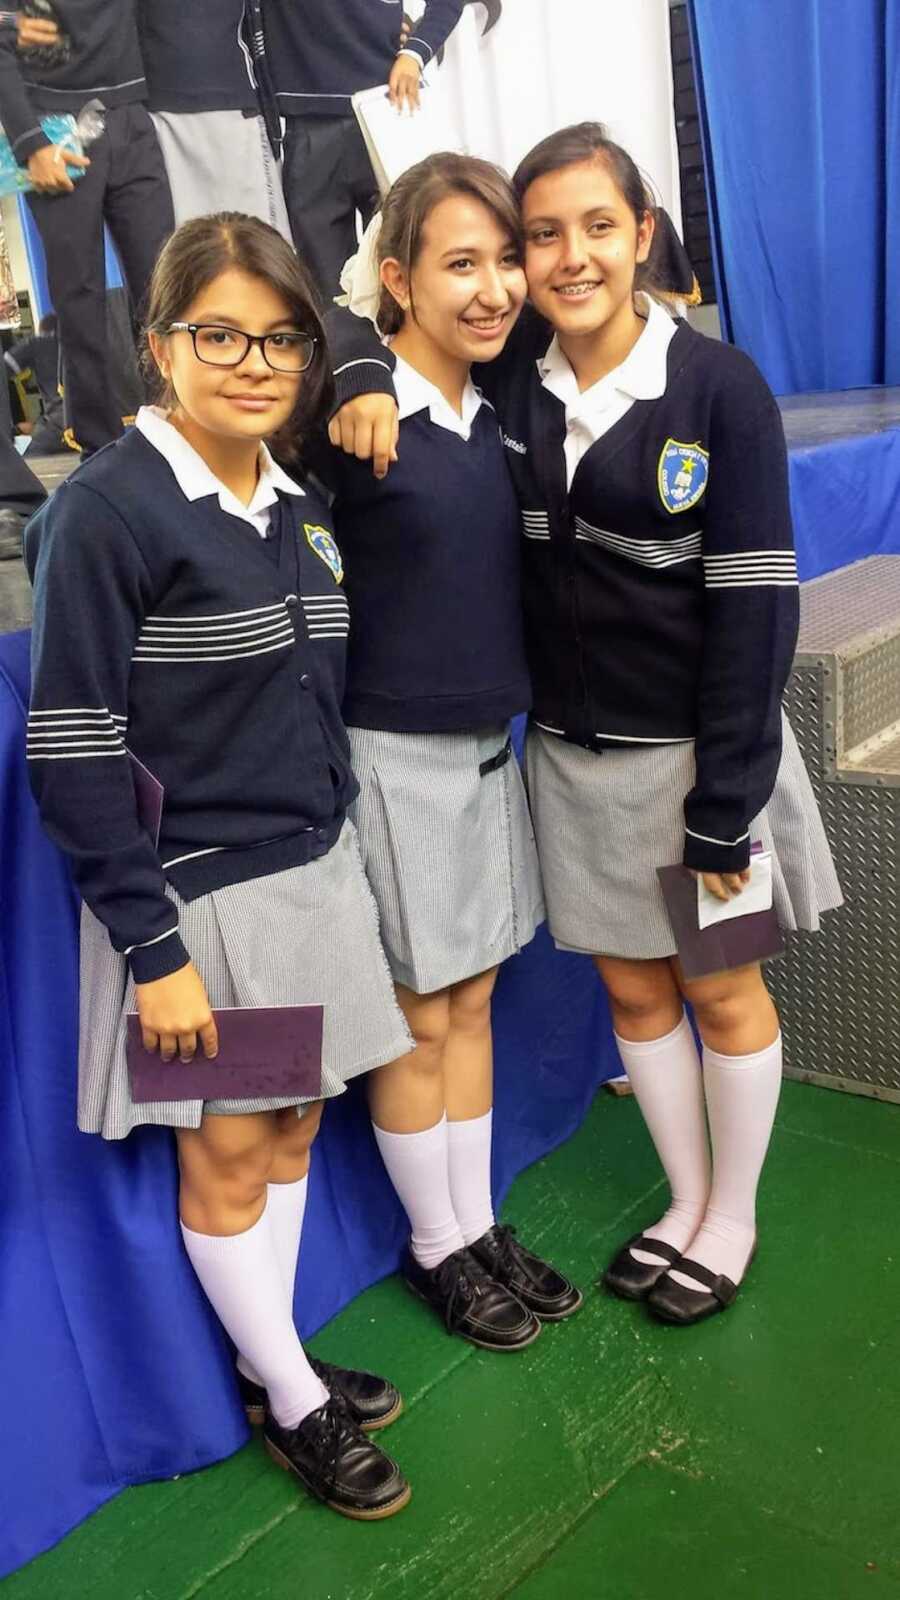 three girls in school uniforms together